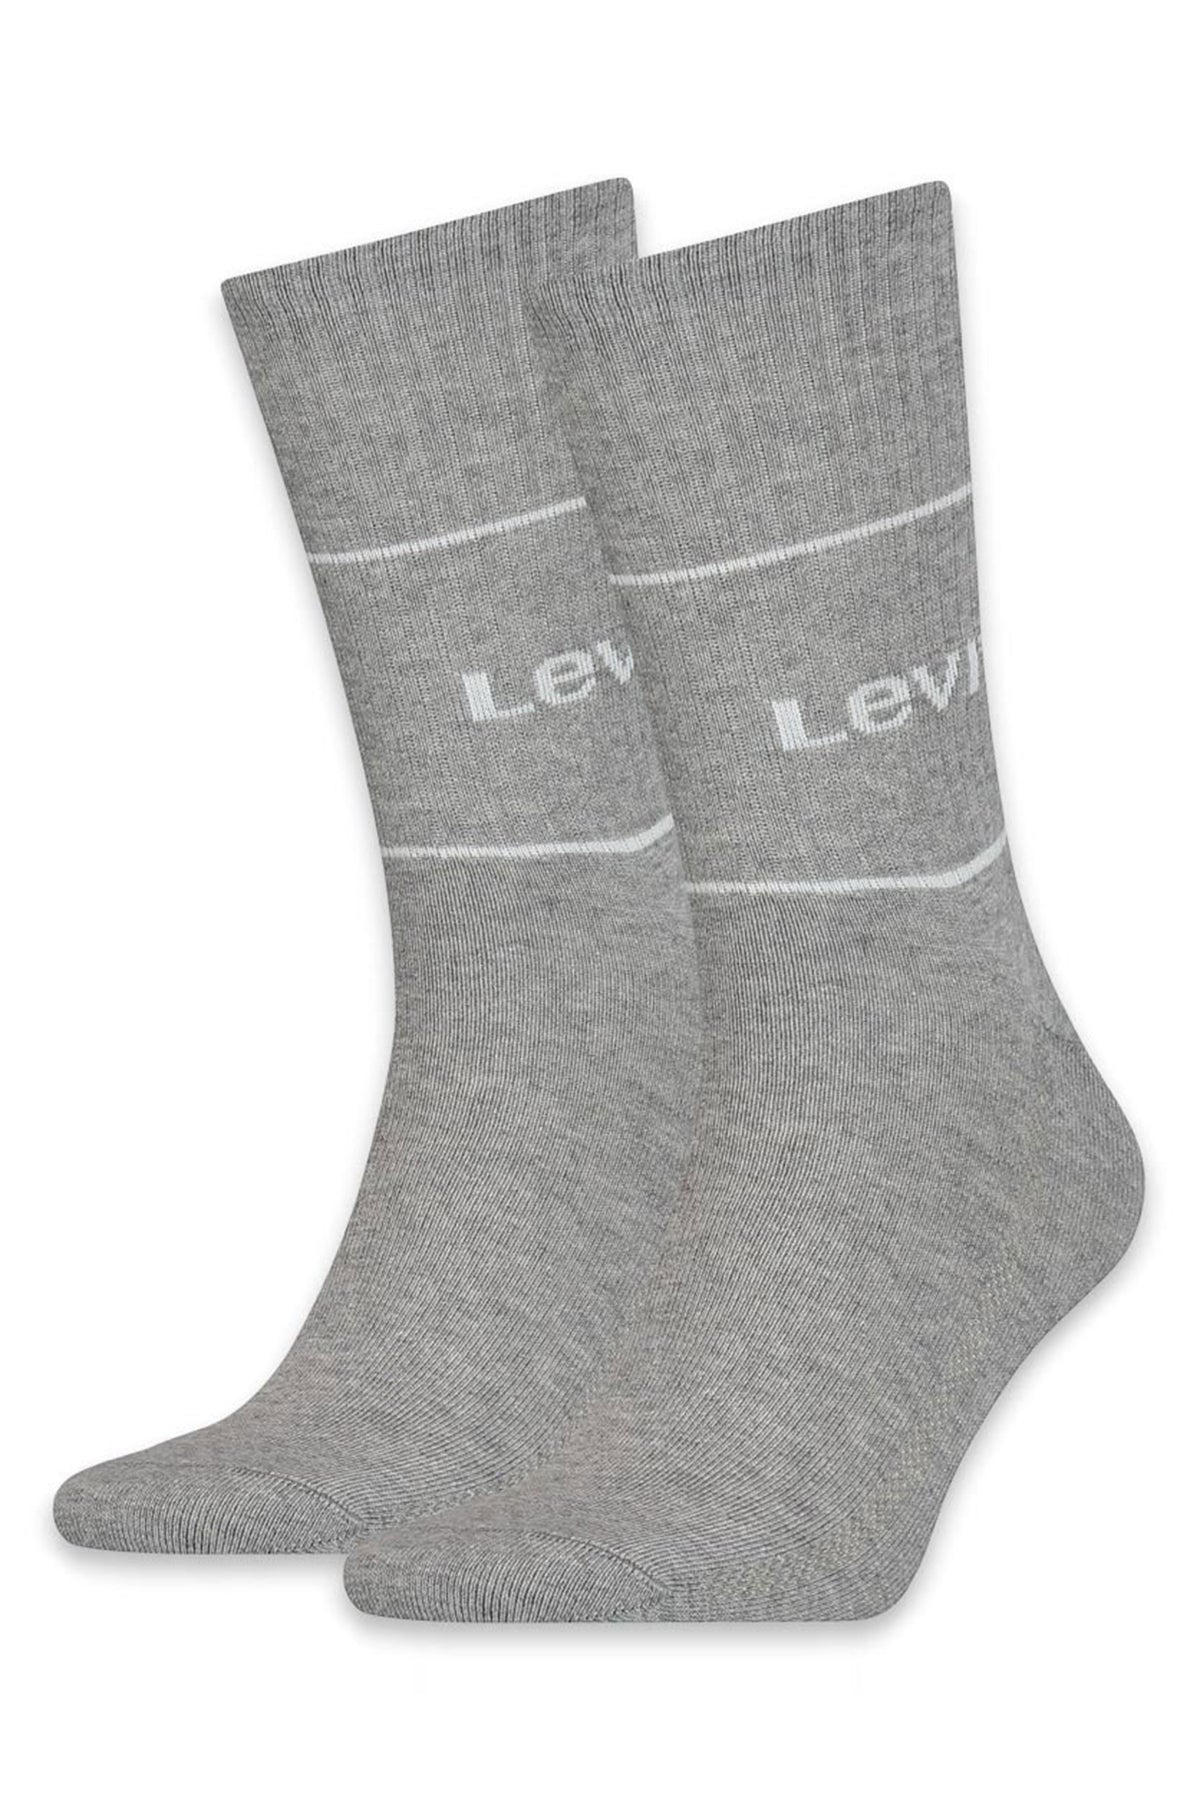 Levi's Pamuklu 2 Pack Erkek Çorap 37157-0667 GRİ